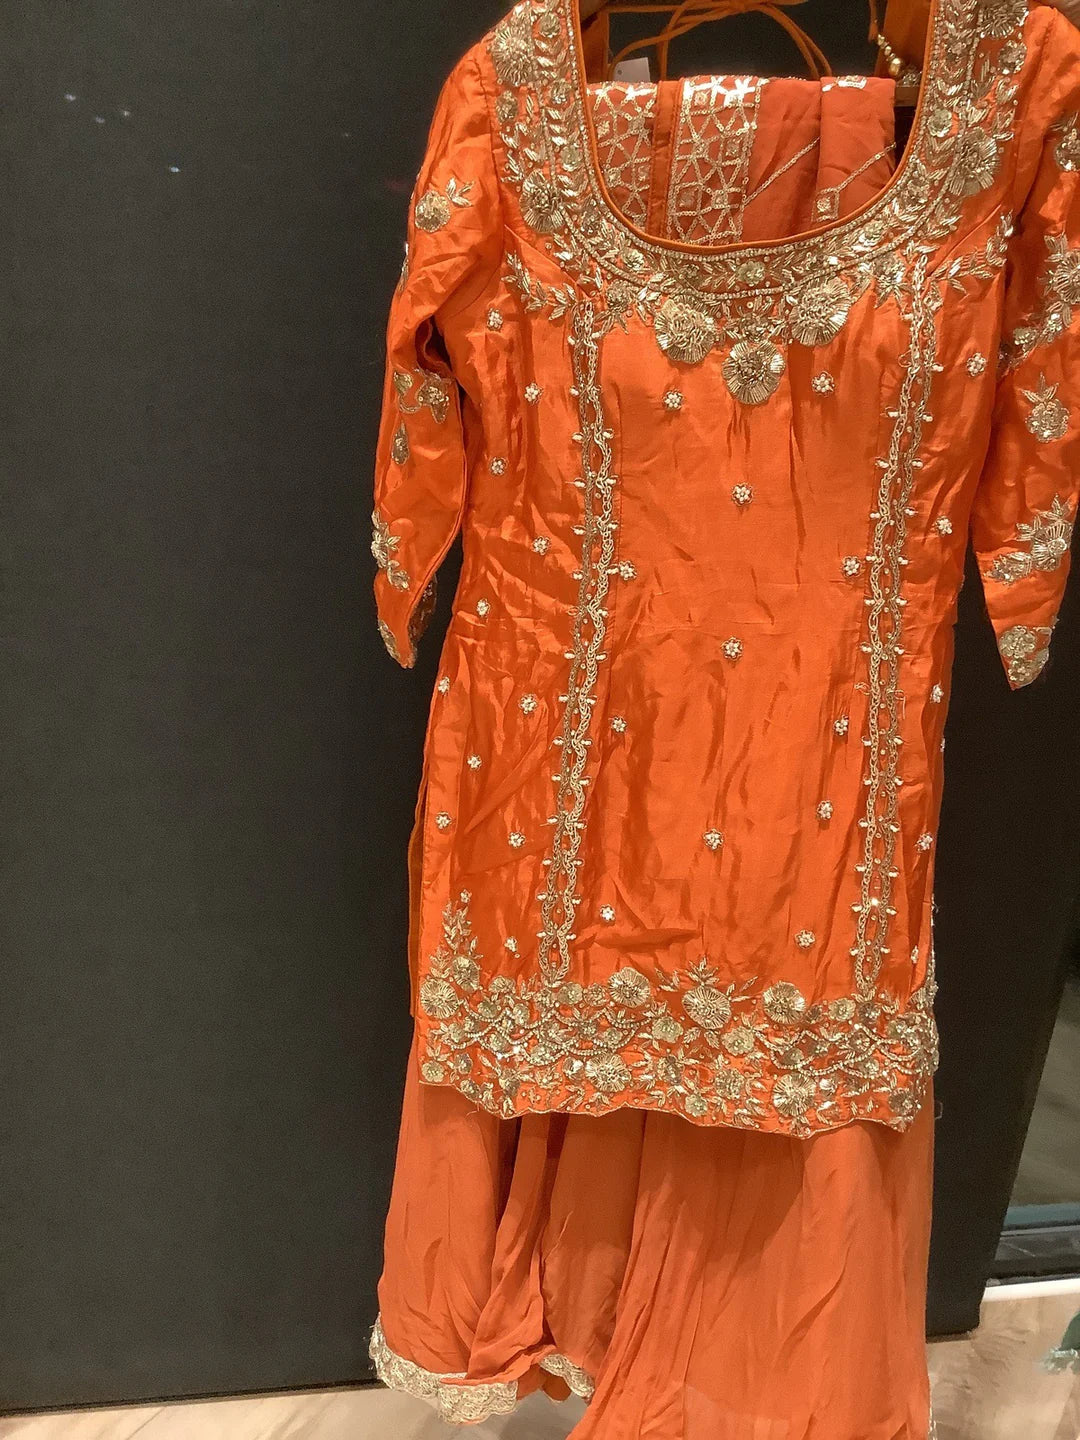 B Orange Sharara Outfit for ladies.